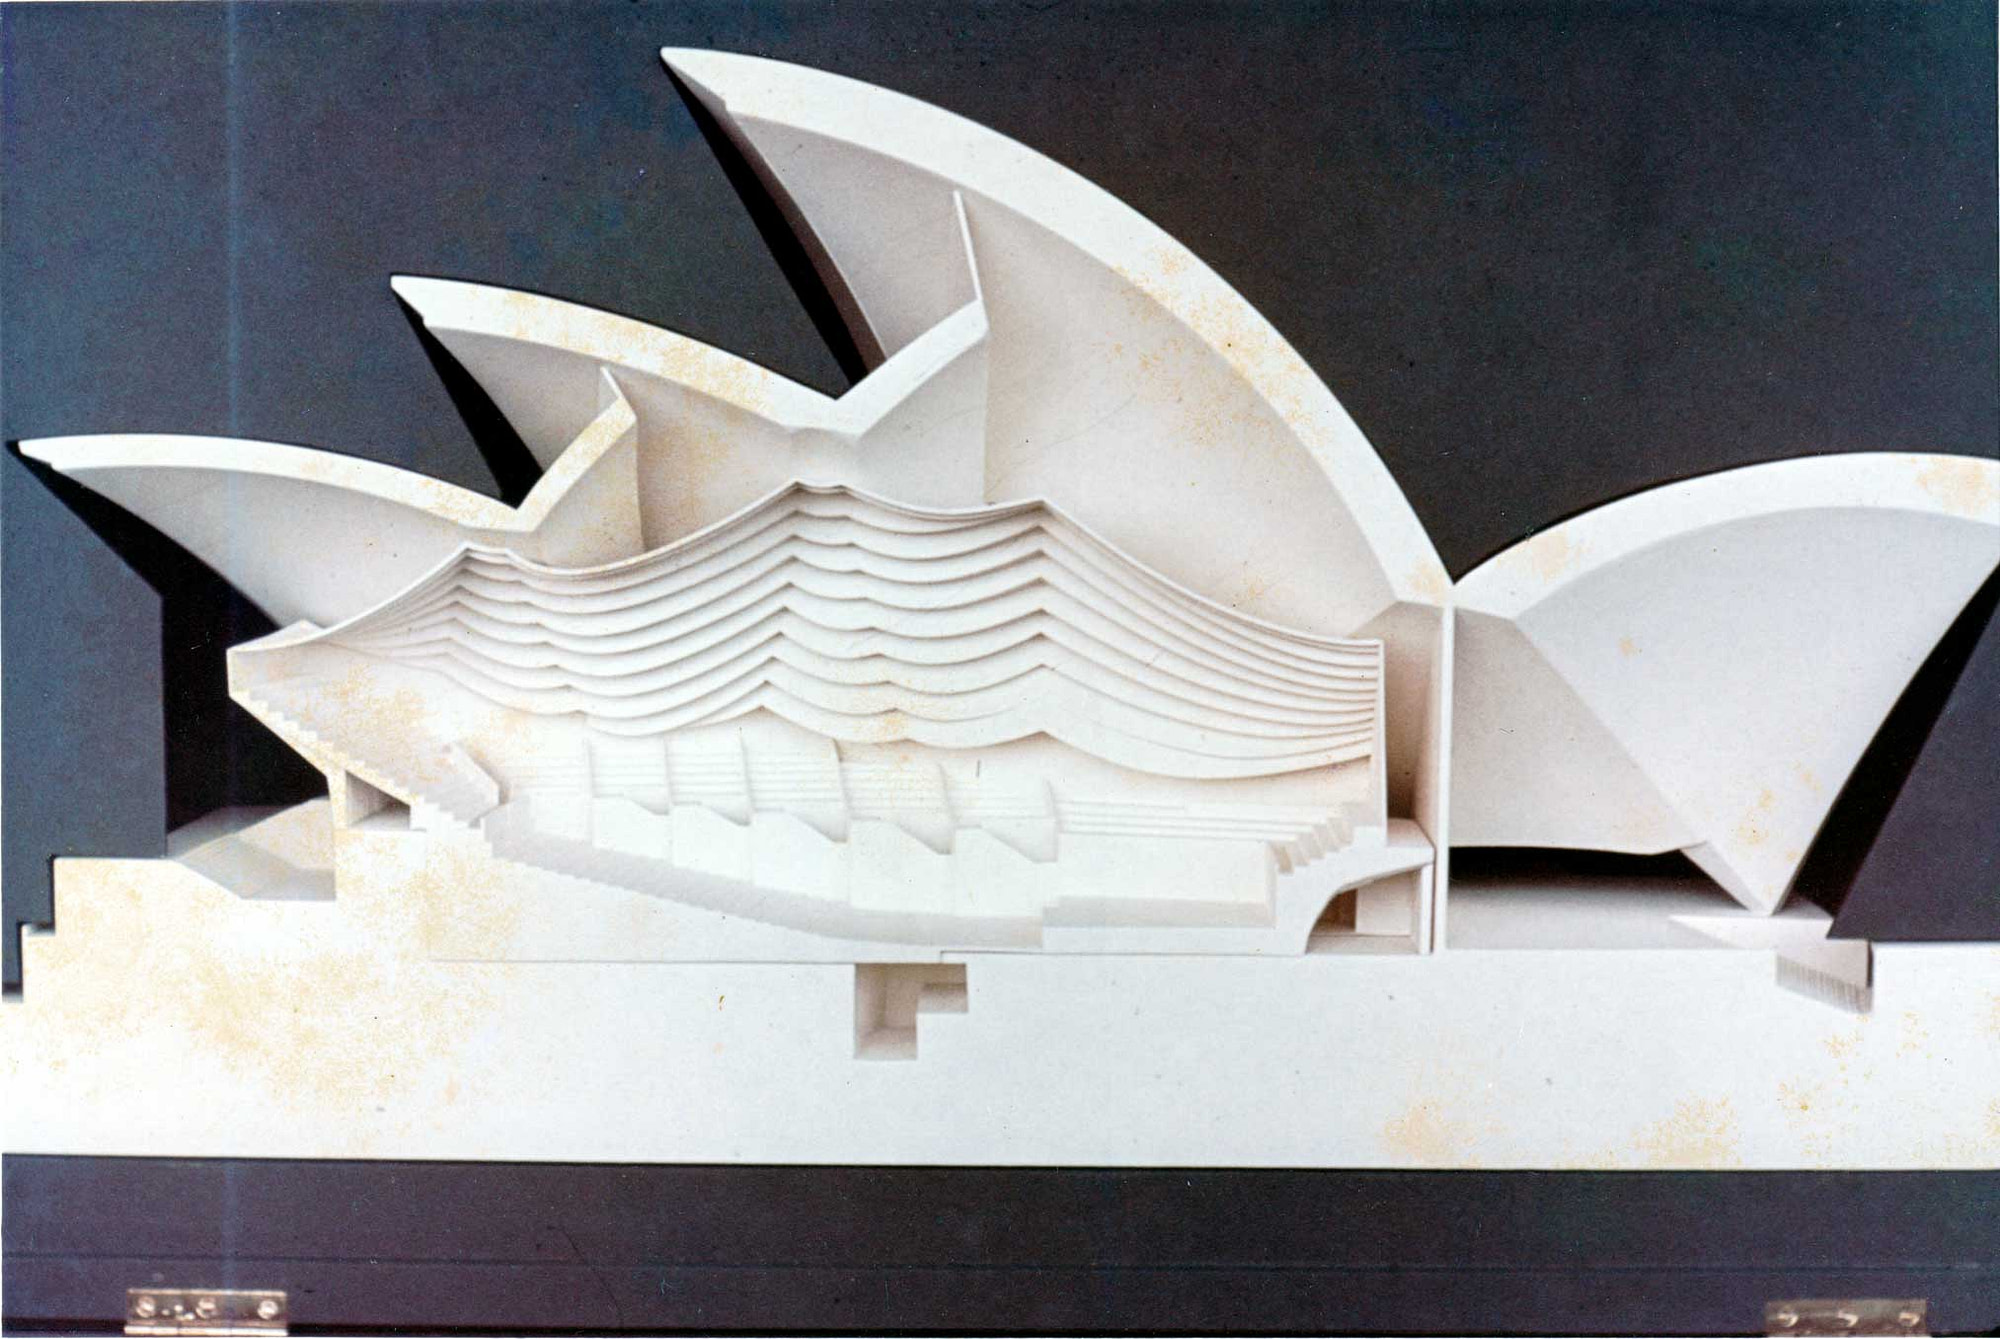 Sydney Opera House model - sails cutaway view